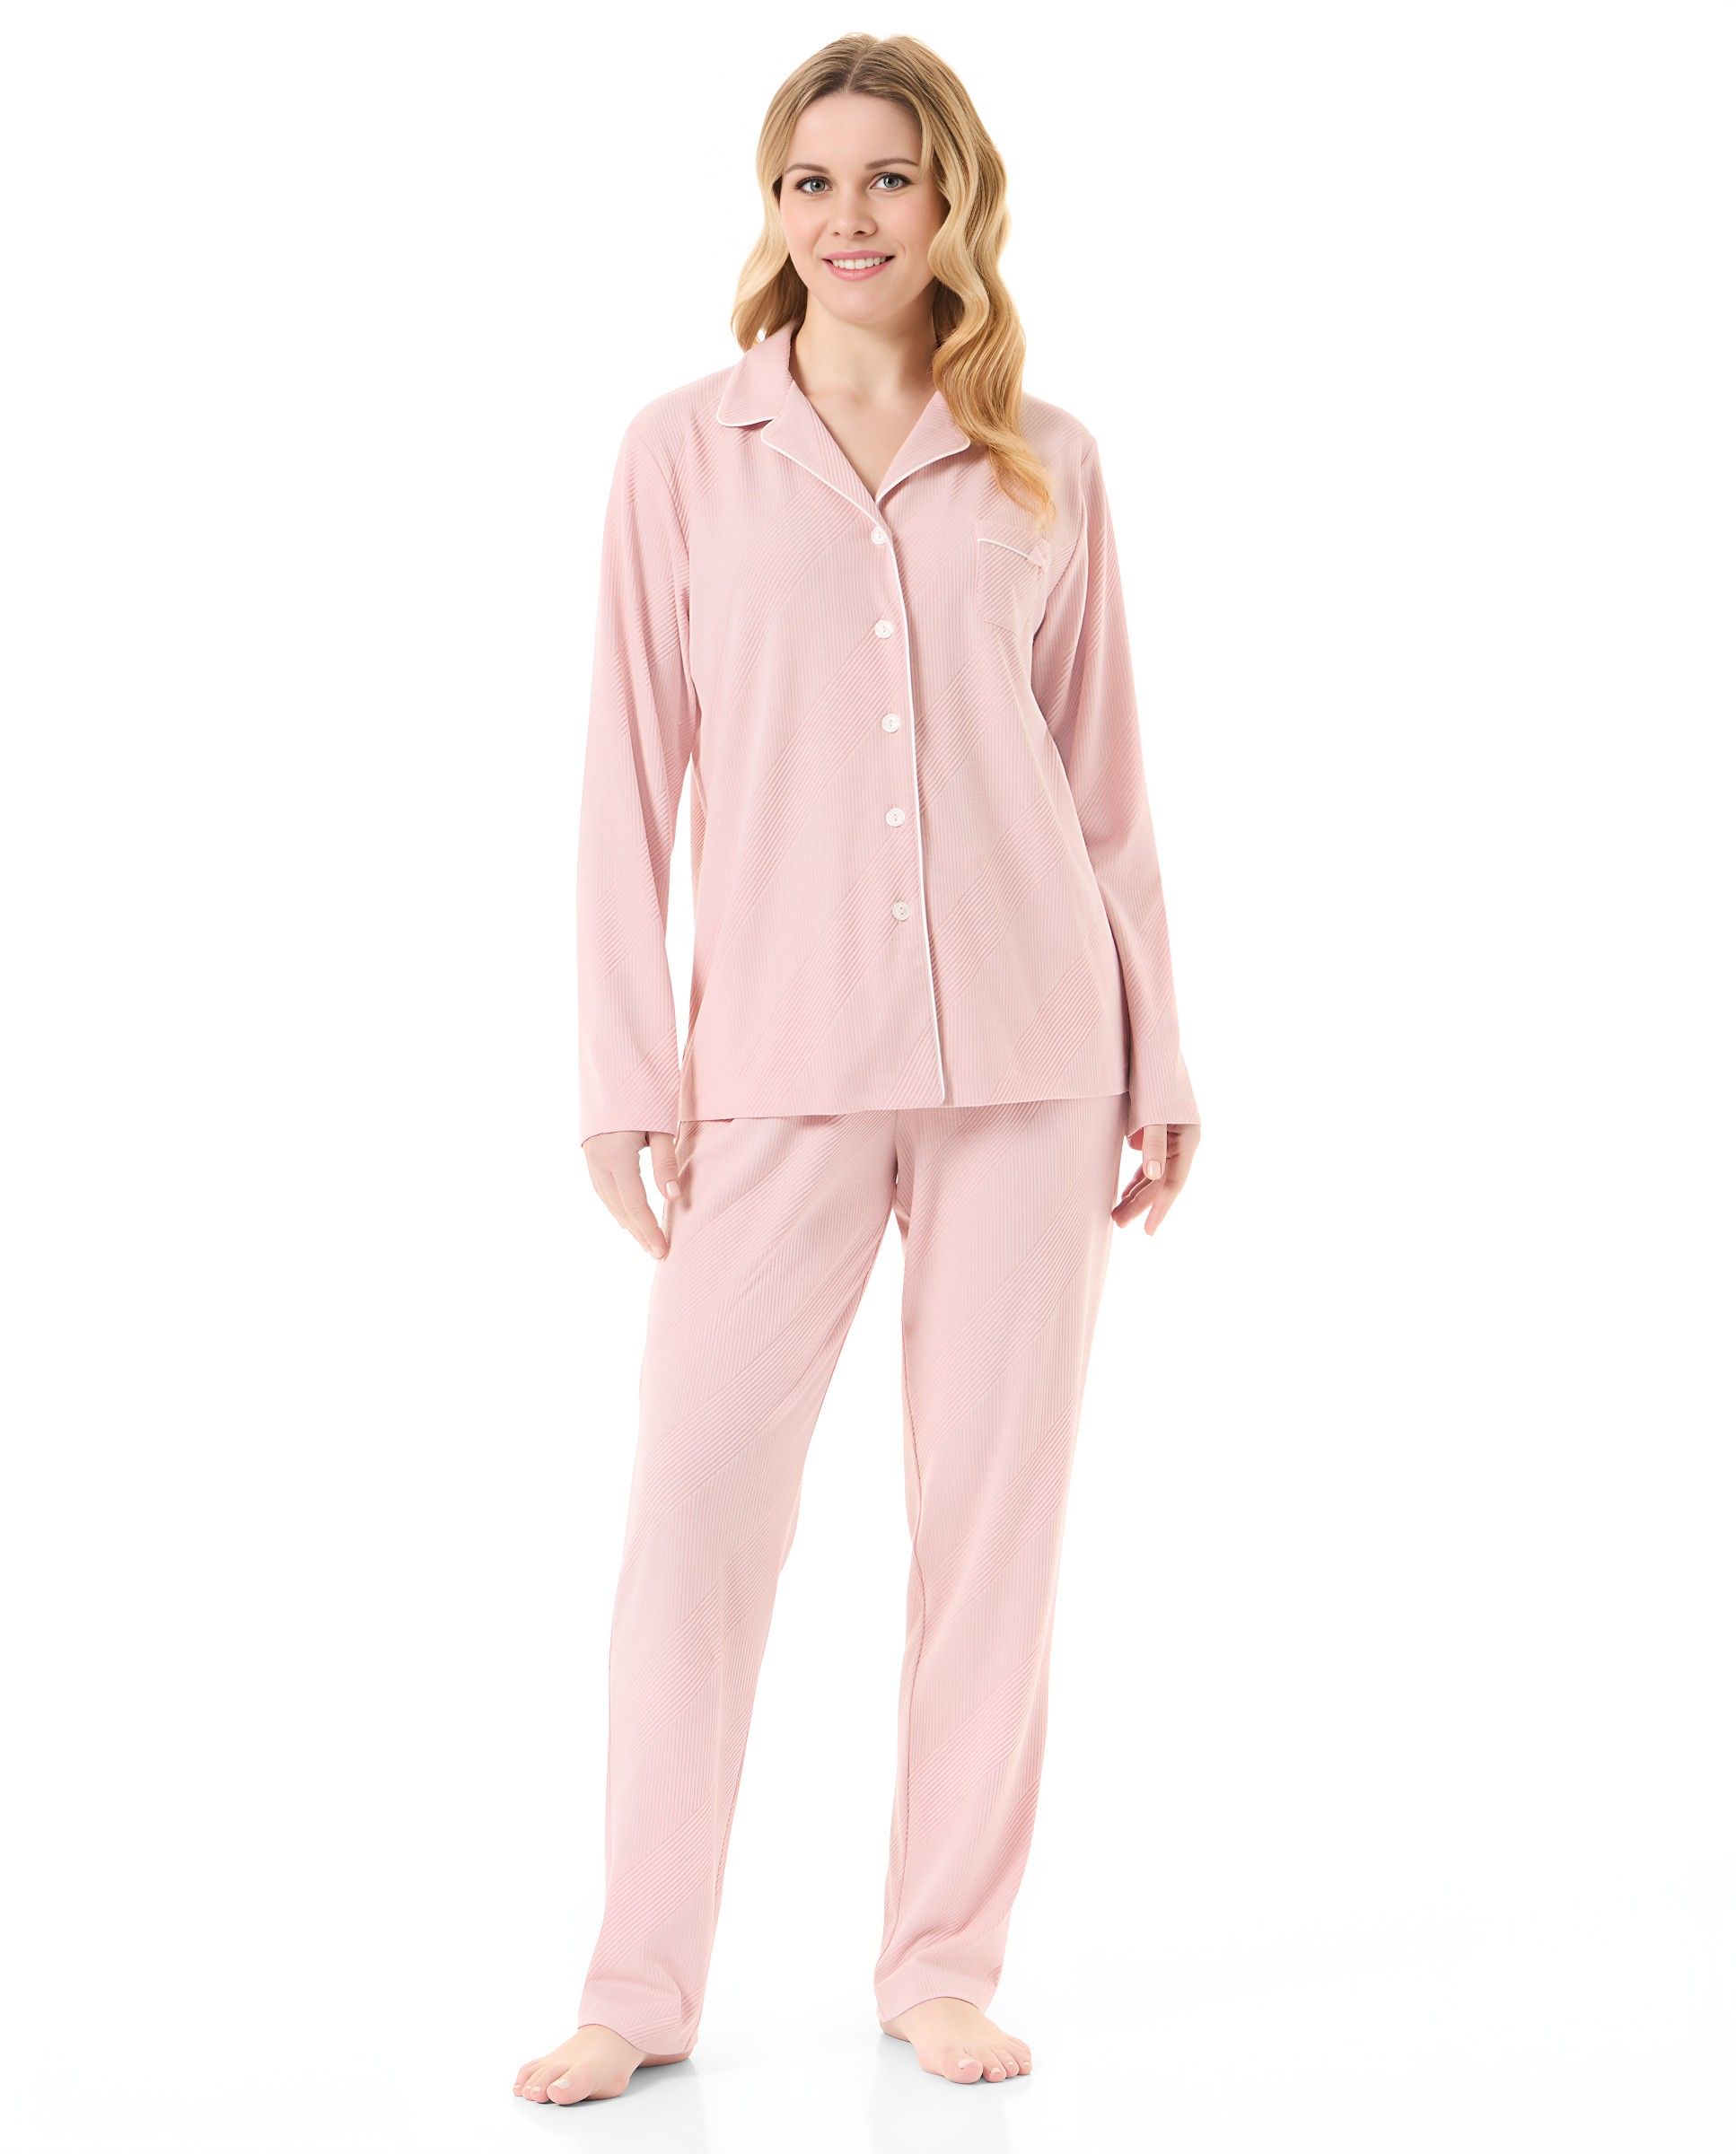 Mujer con pijama de invierno largo, chaqueta lisa abierta con botones manga larga, canalé relieve, pantalón largo liso